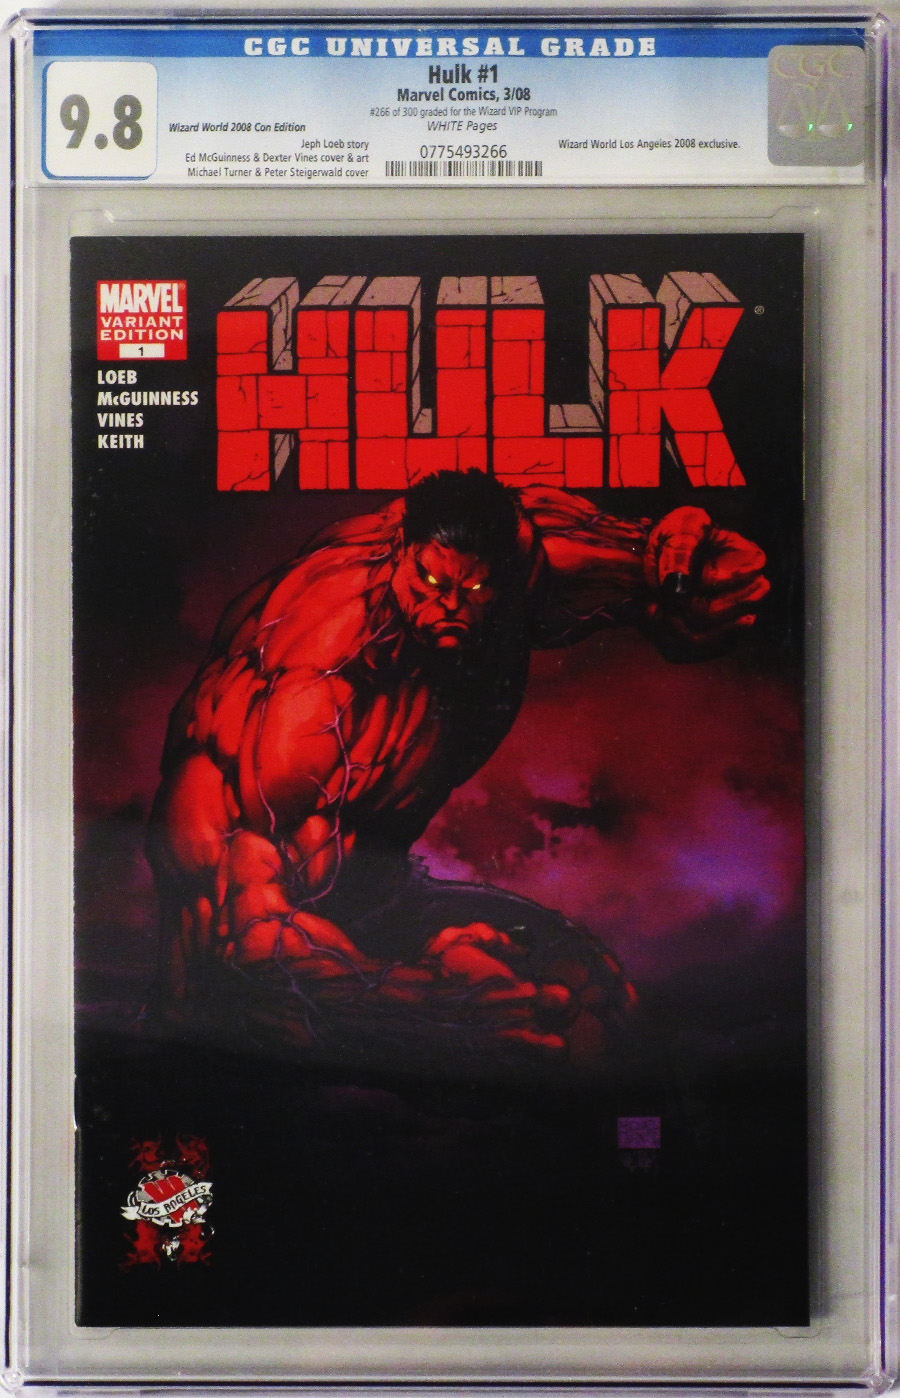 Hulk Vol 2 #1 Cover L CGC 9.8 WWLA 2008 Michael Turner Cover